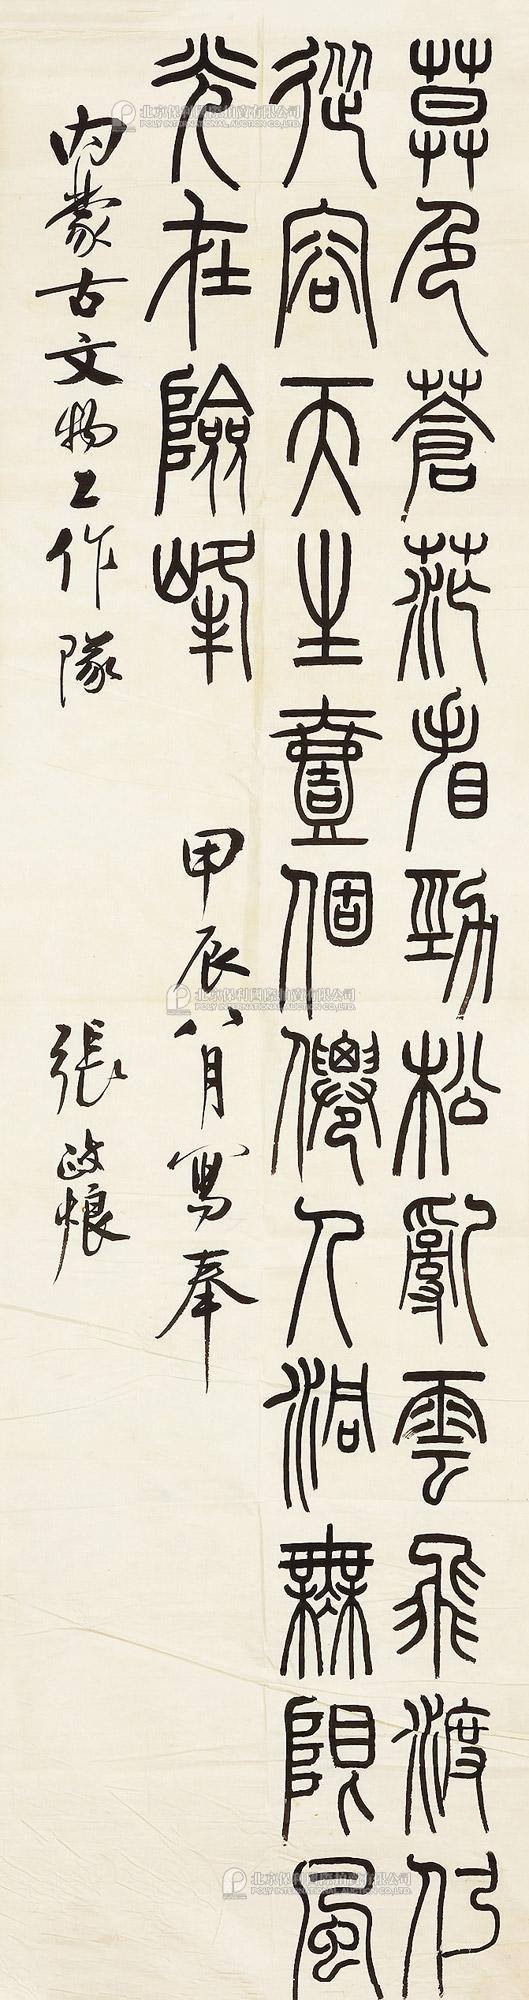 Calligraphy by Zhang Zhengzhuo